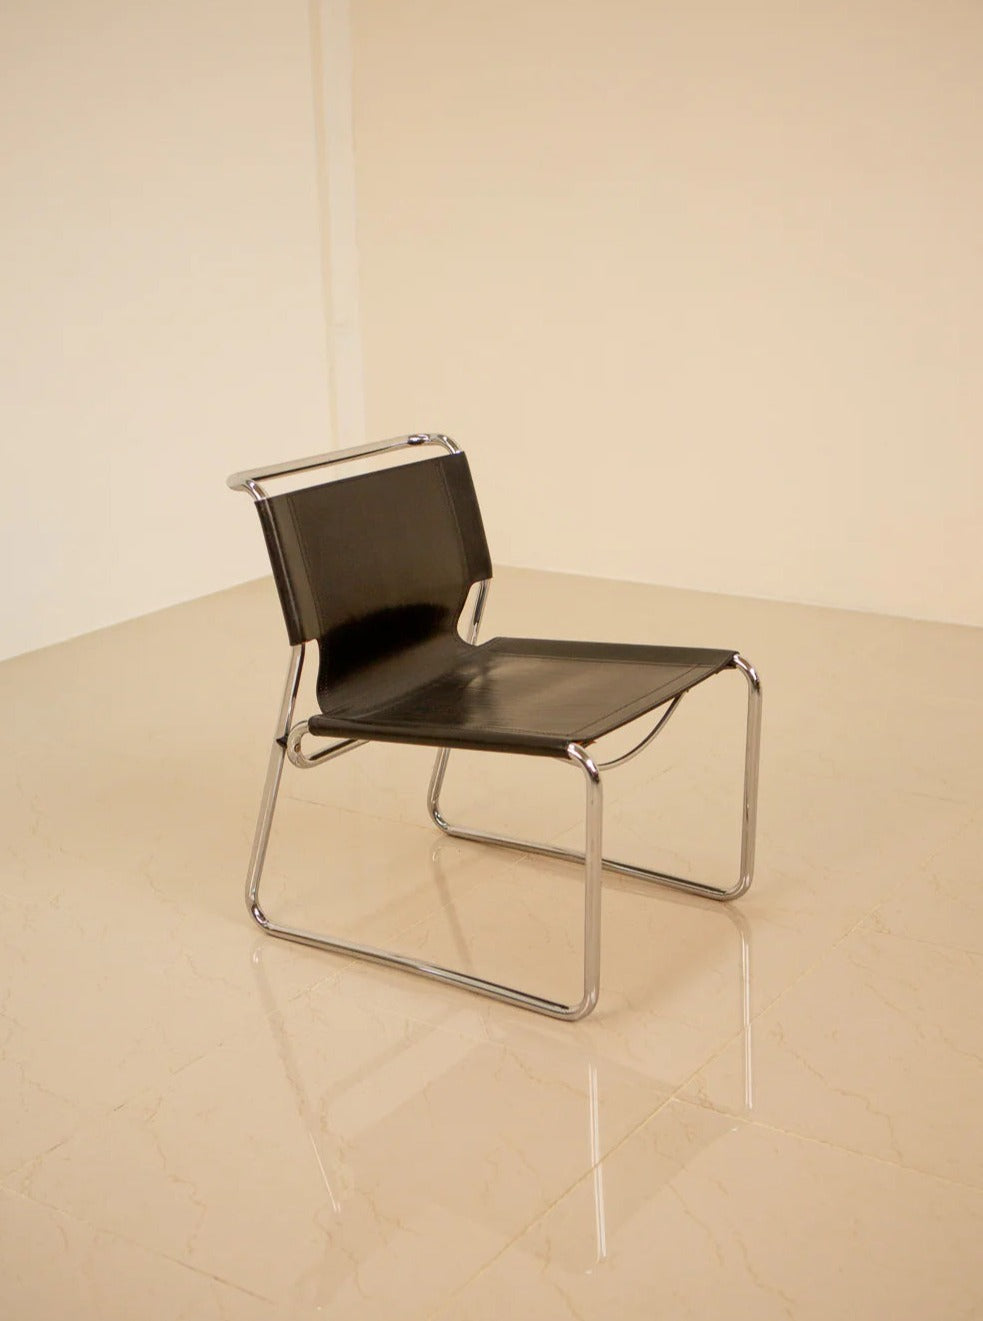 Cesca　Iconic　Chair　Marcel　Breuer's